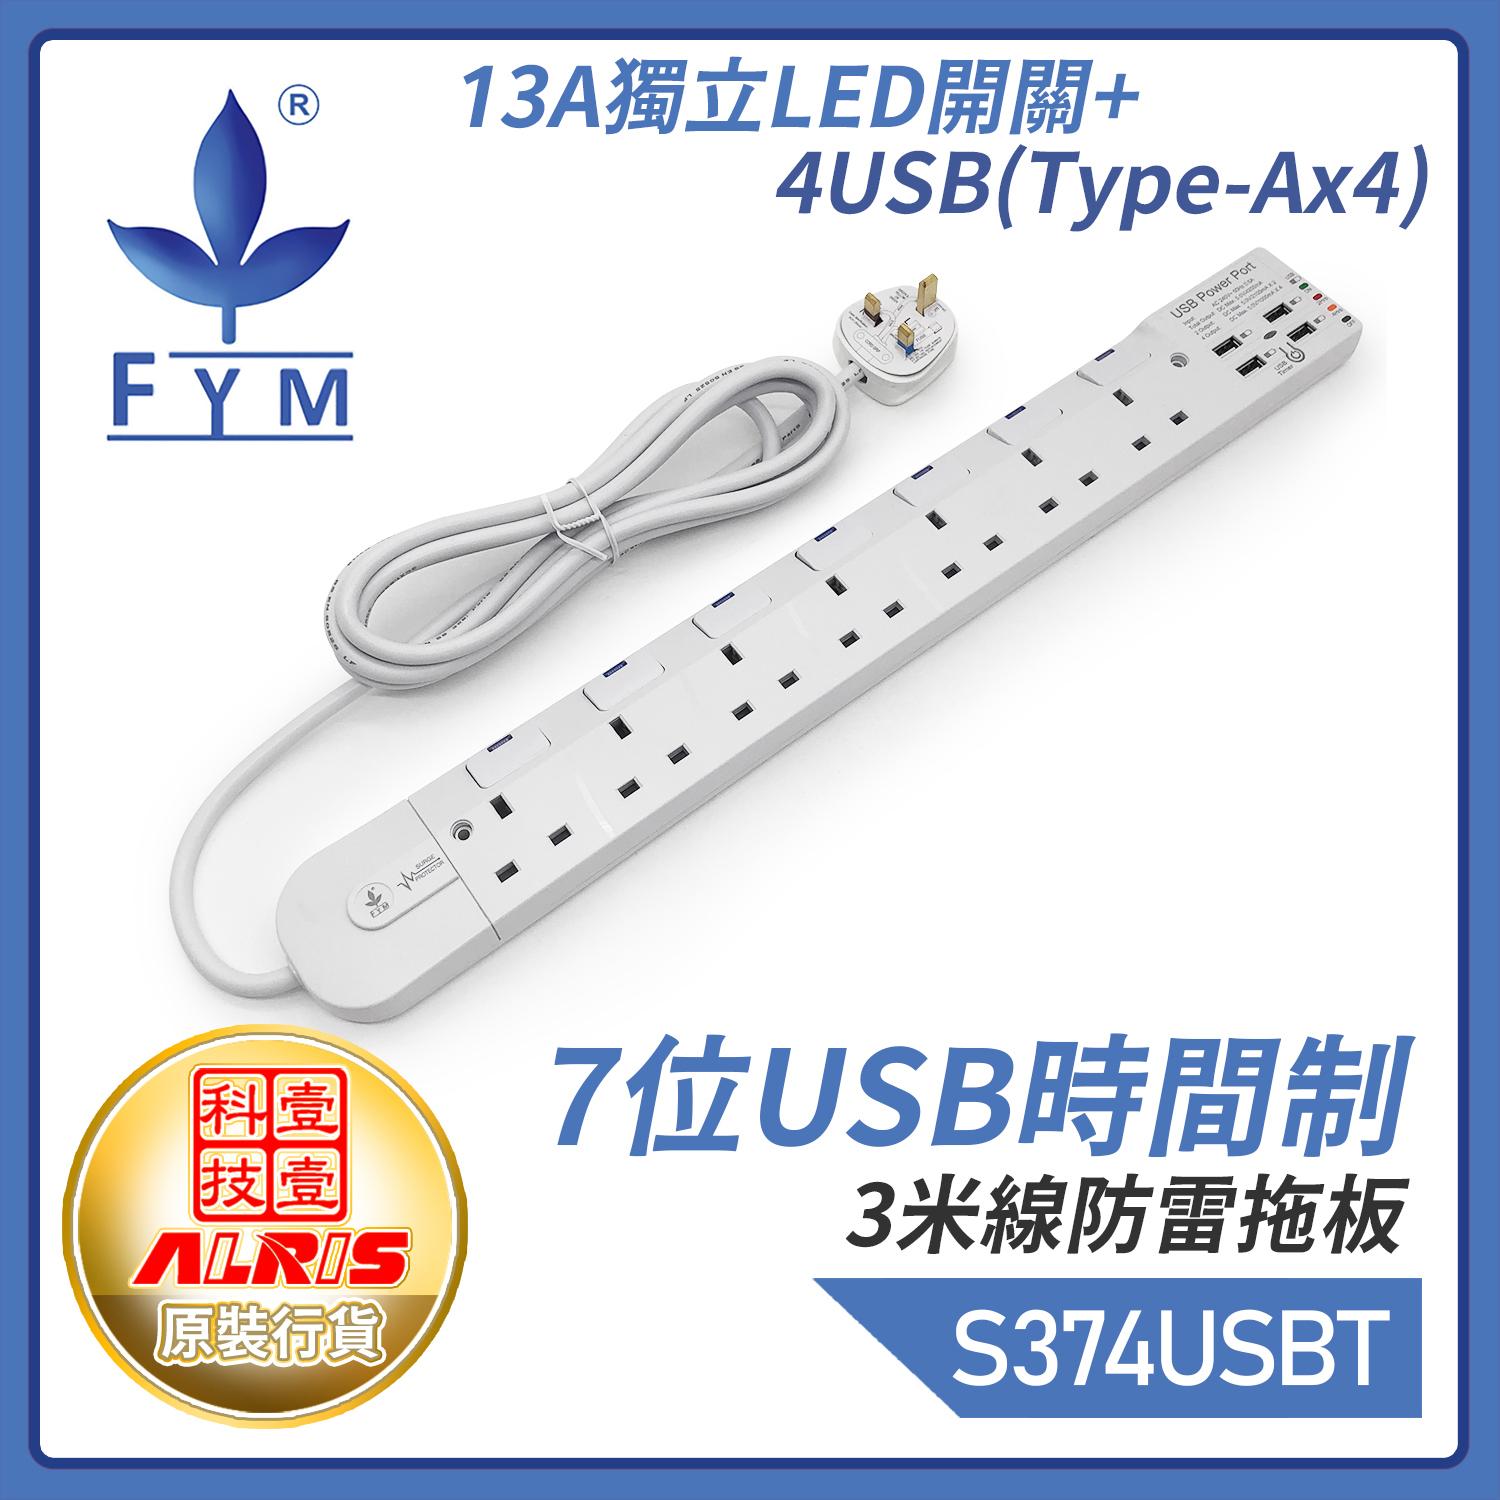 白色7位13A獨立LED開關+4USB-A共享4.2A可選2/4小時定時充電3米線防雷拖板，一鍵USB定時或開關共享5V4.2A極速快充兒童安全門保護850°C灼熱阻燃時間制(S374USB-T)